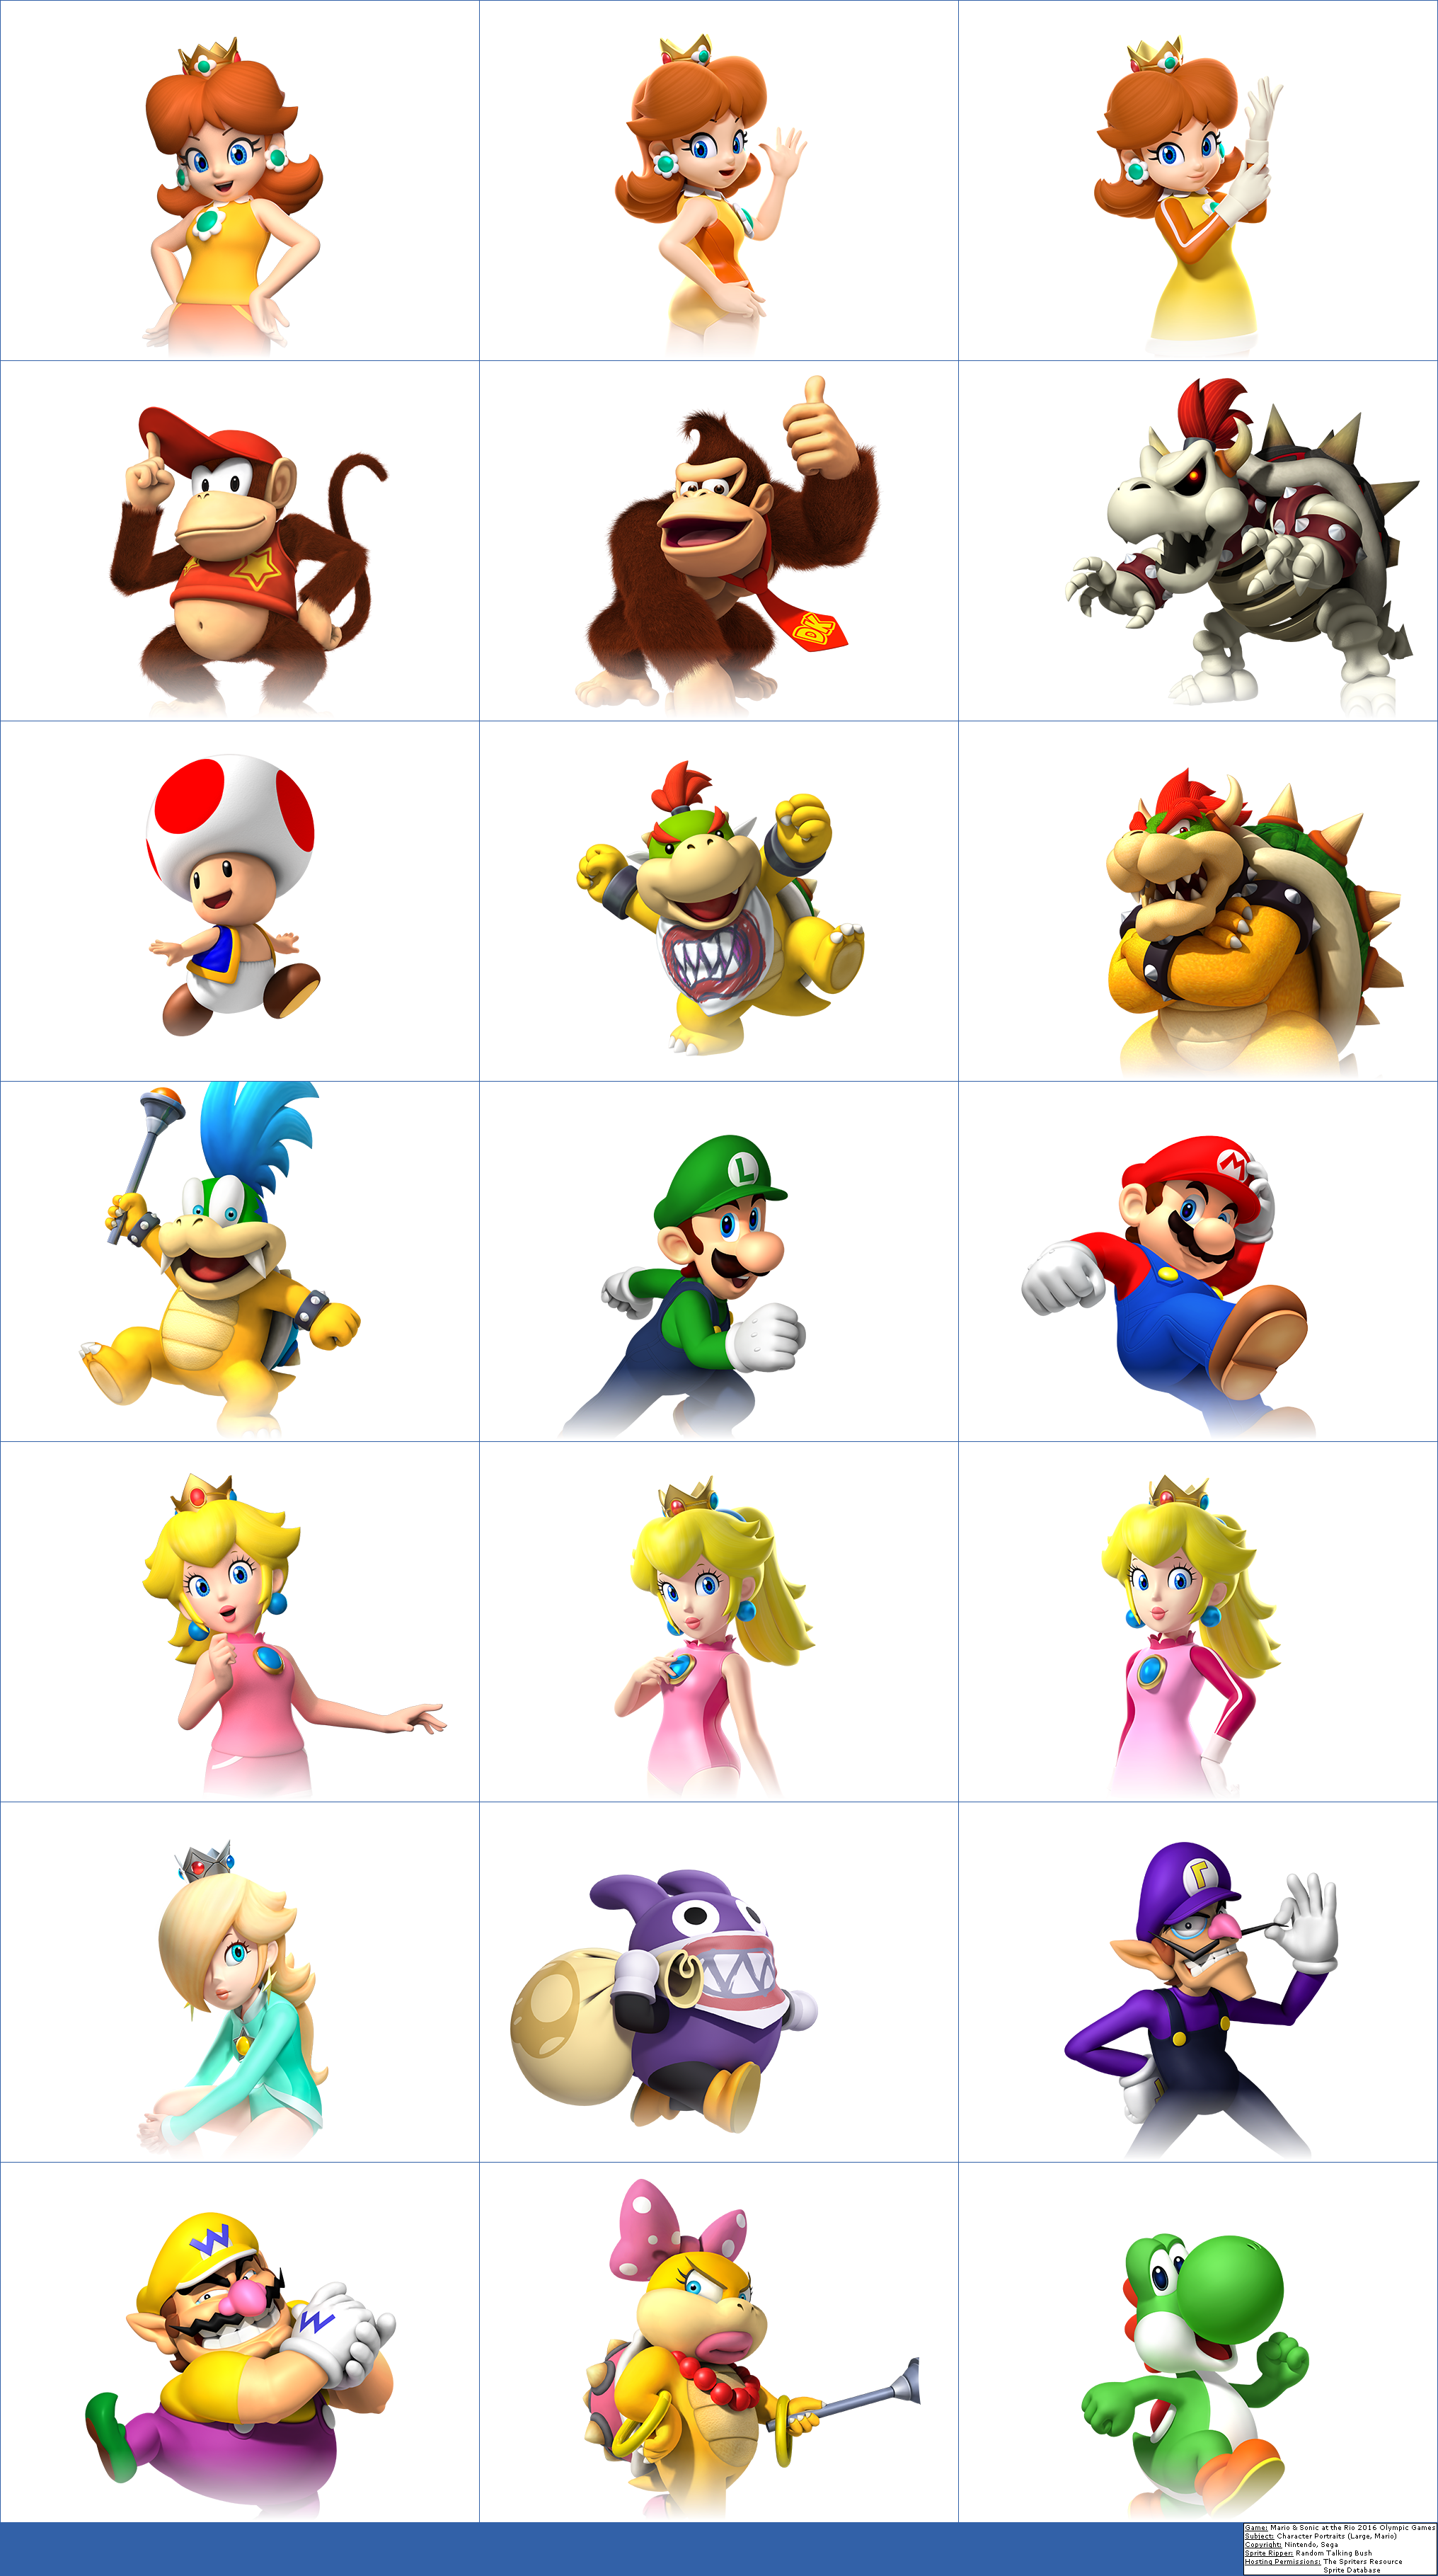 Character Portraits (Large, Mario)